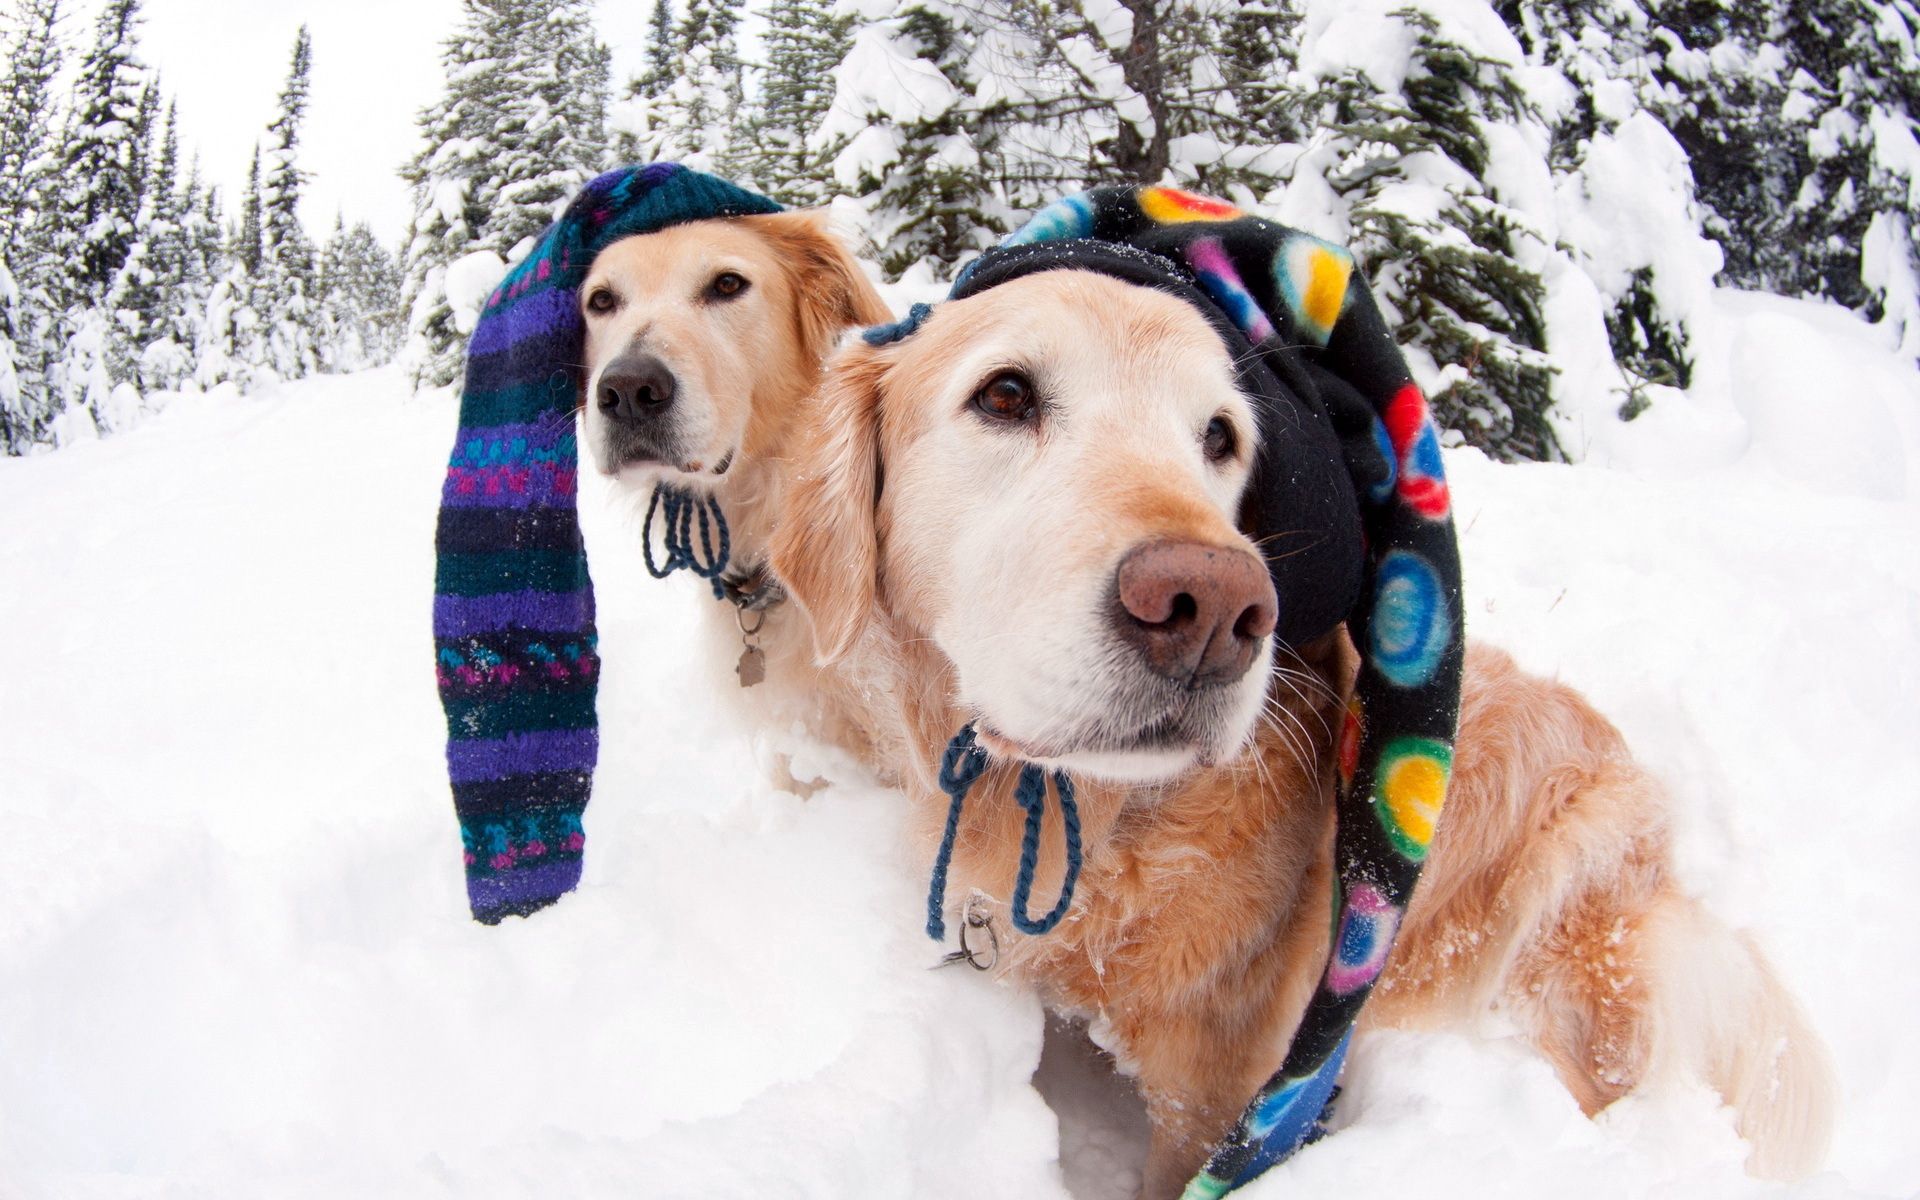 animals, winter, dogs, snow, hats, caps